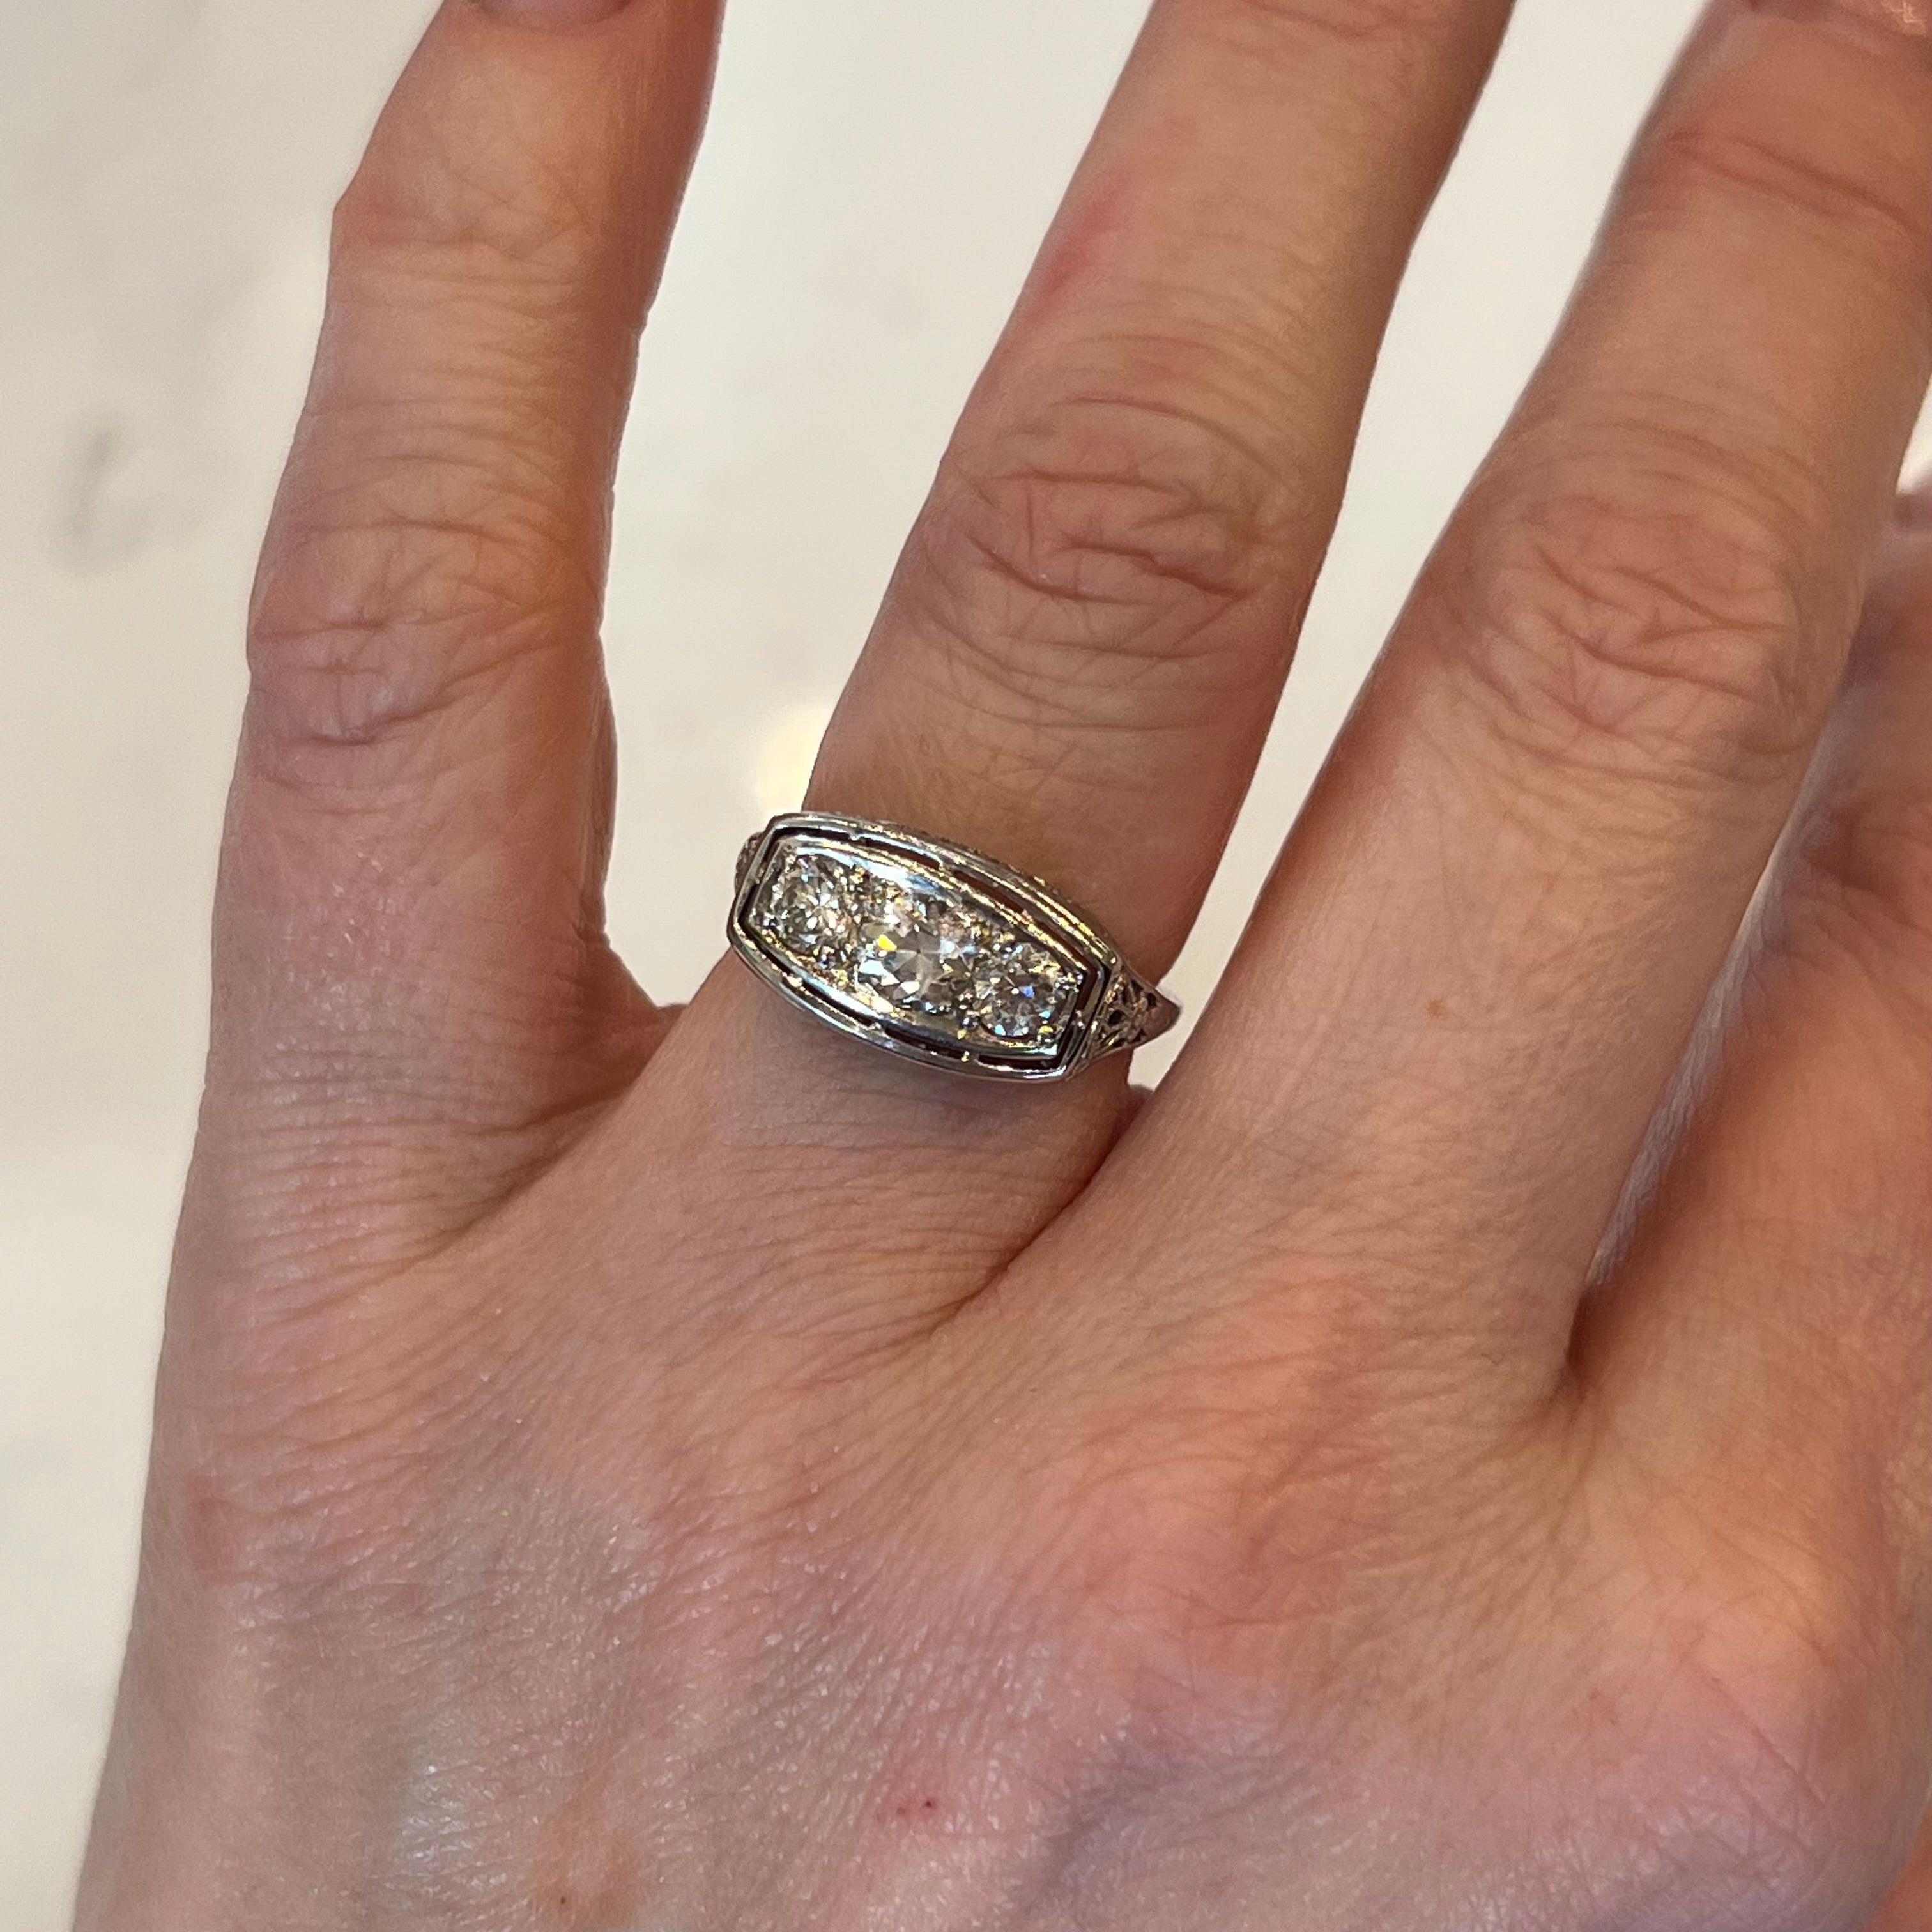 Shop Jewellery Online - Walter Gents Diamond Ring - JewelsLane